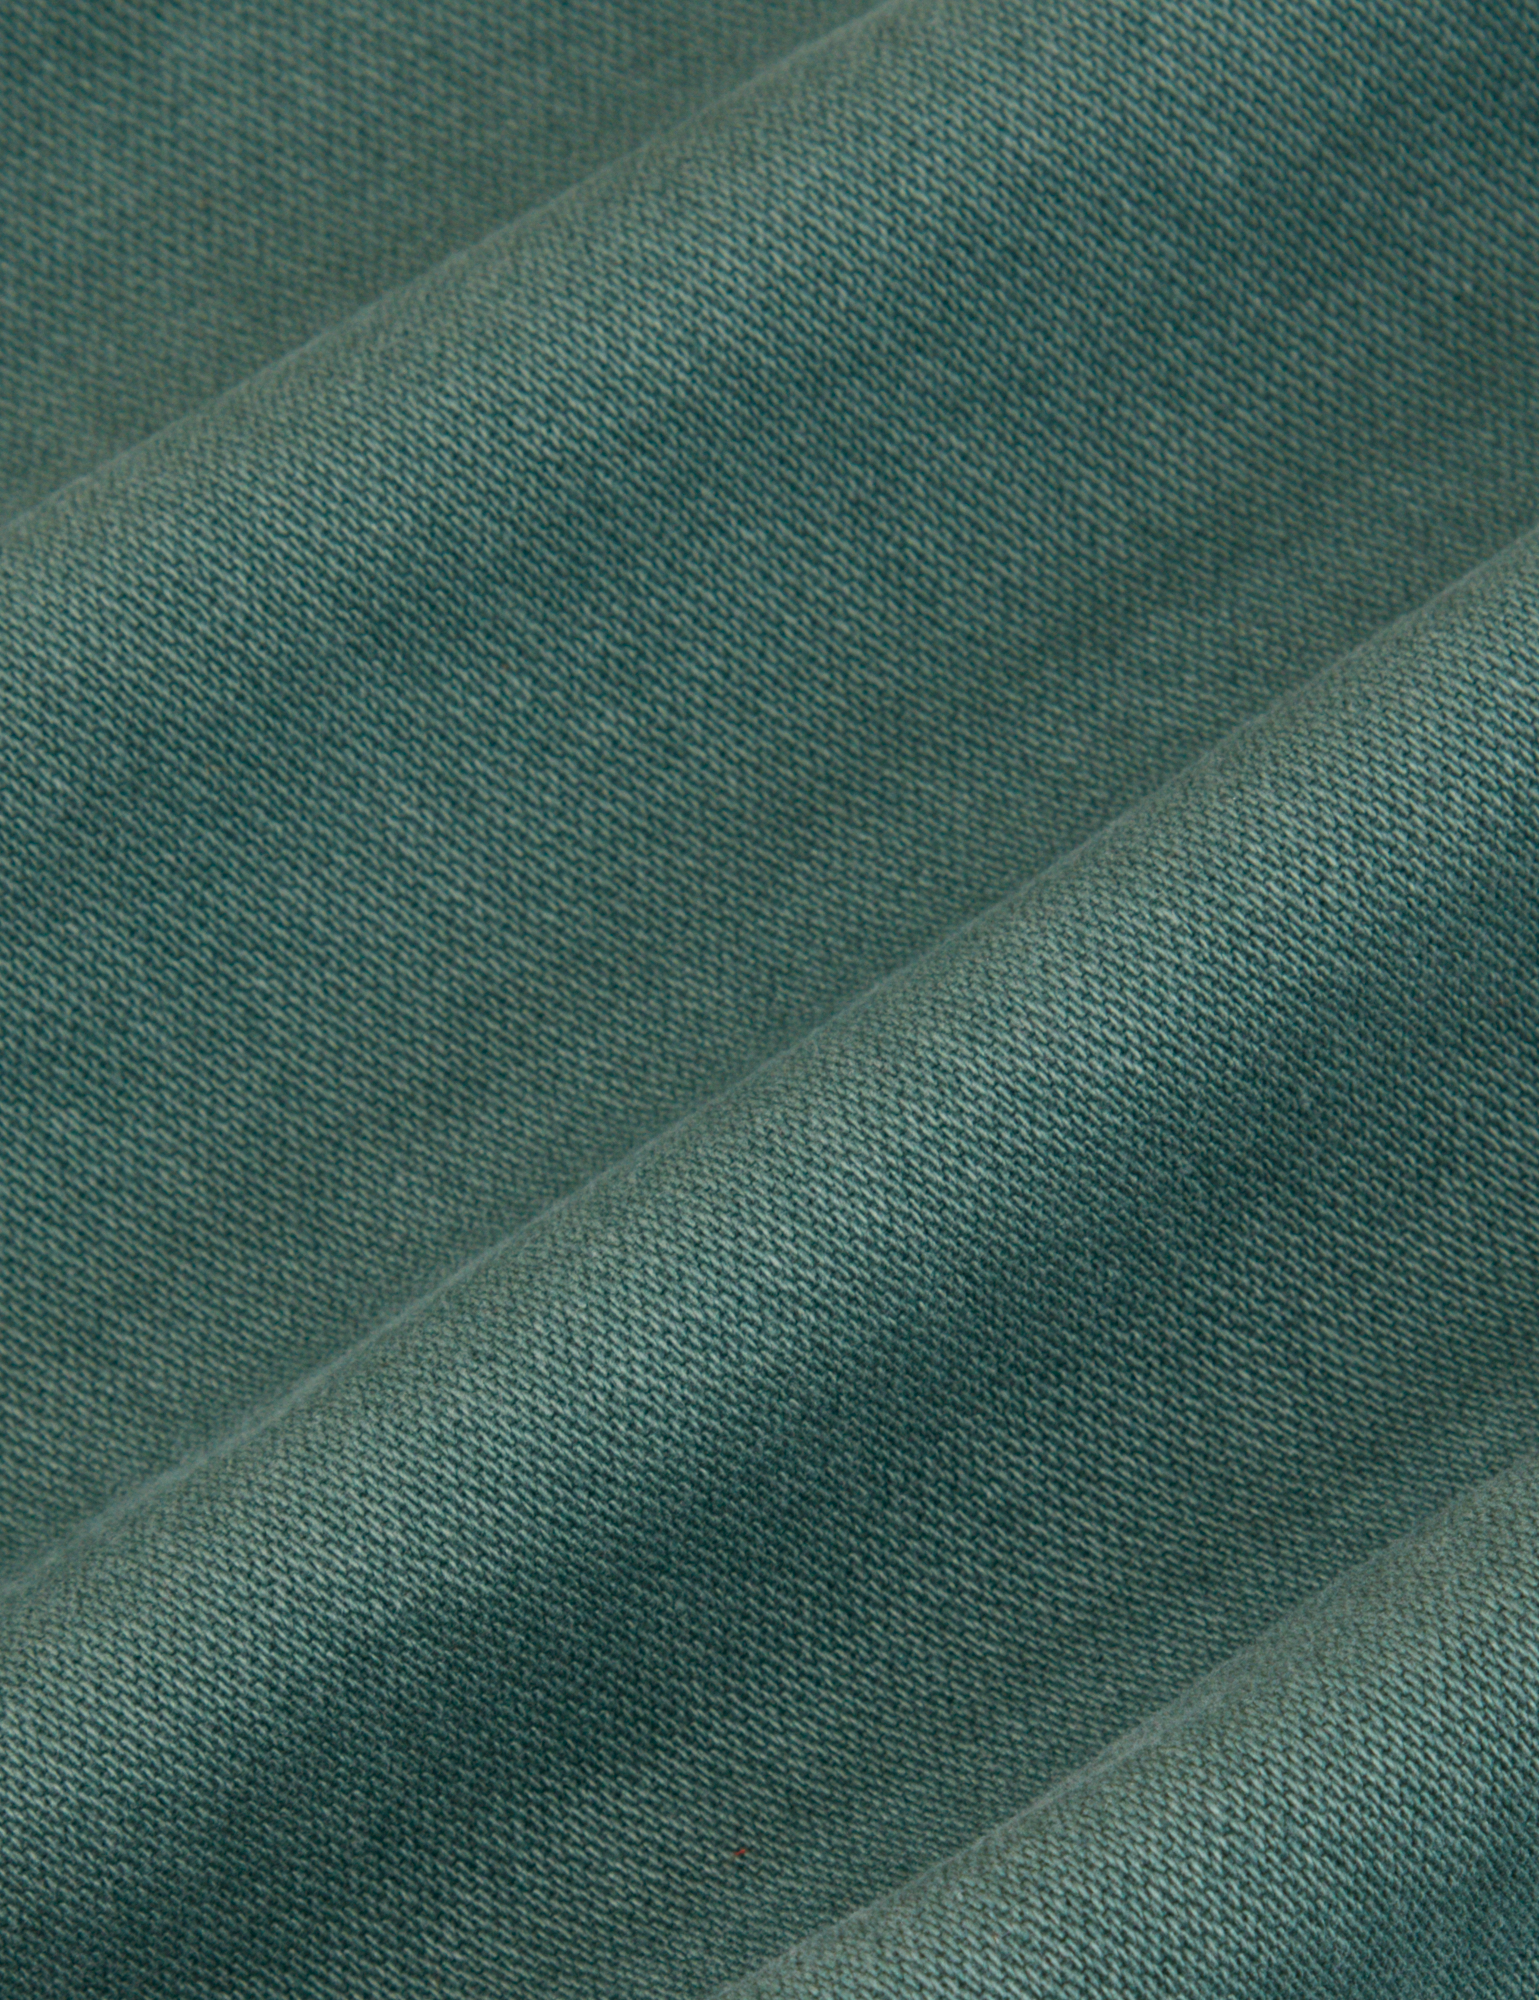 Original Overalls in Dark Emerald Green fabric detail